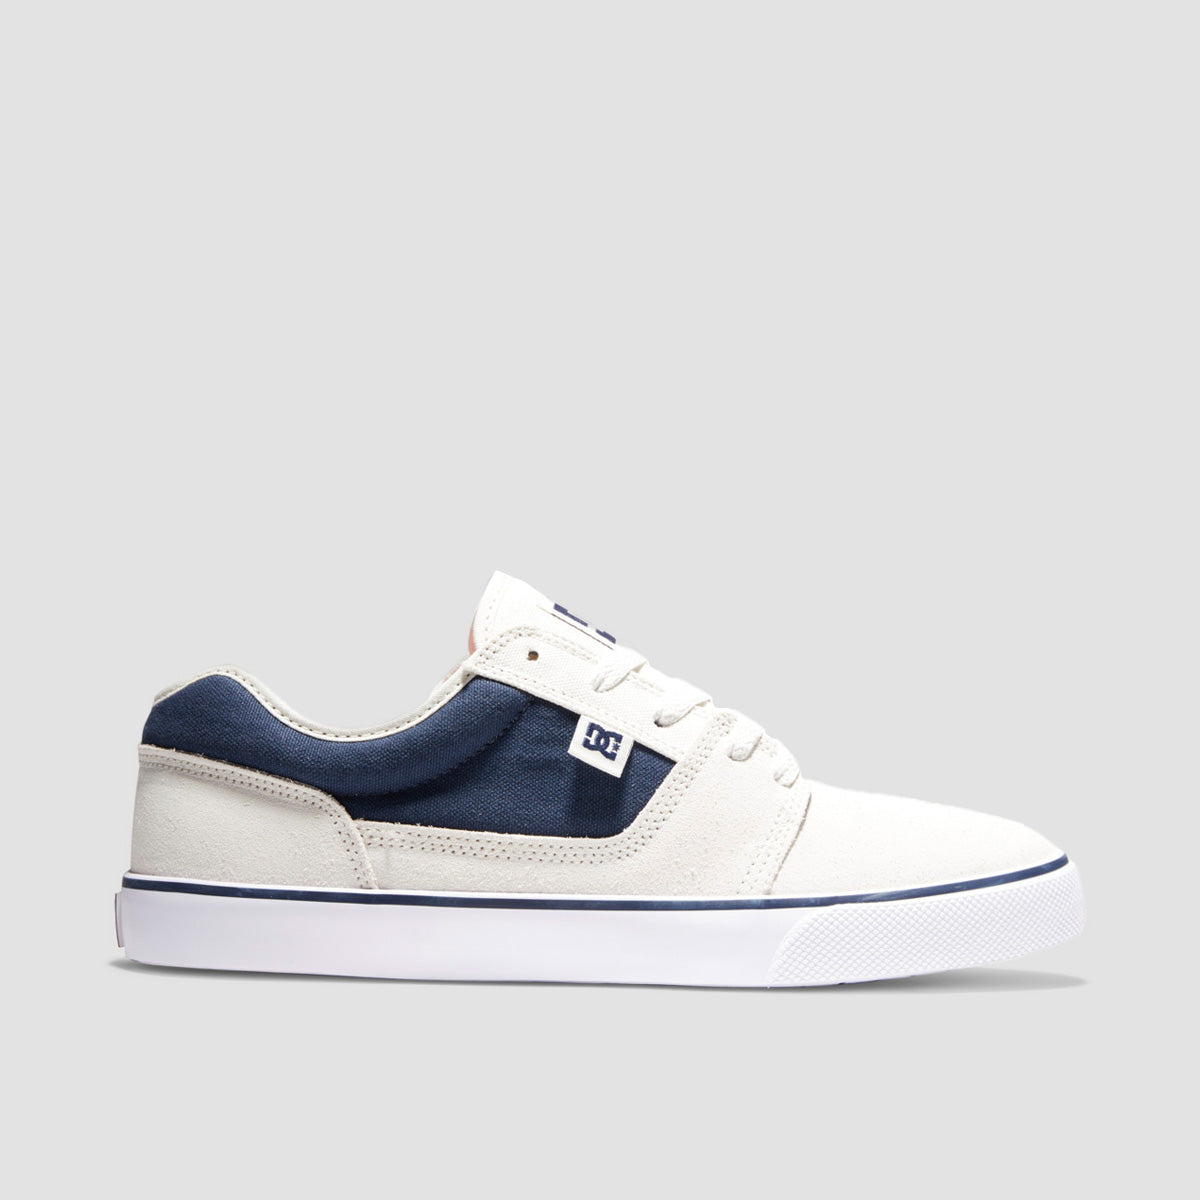 DC Tonik Shoes - White/Navy